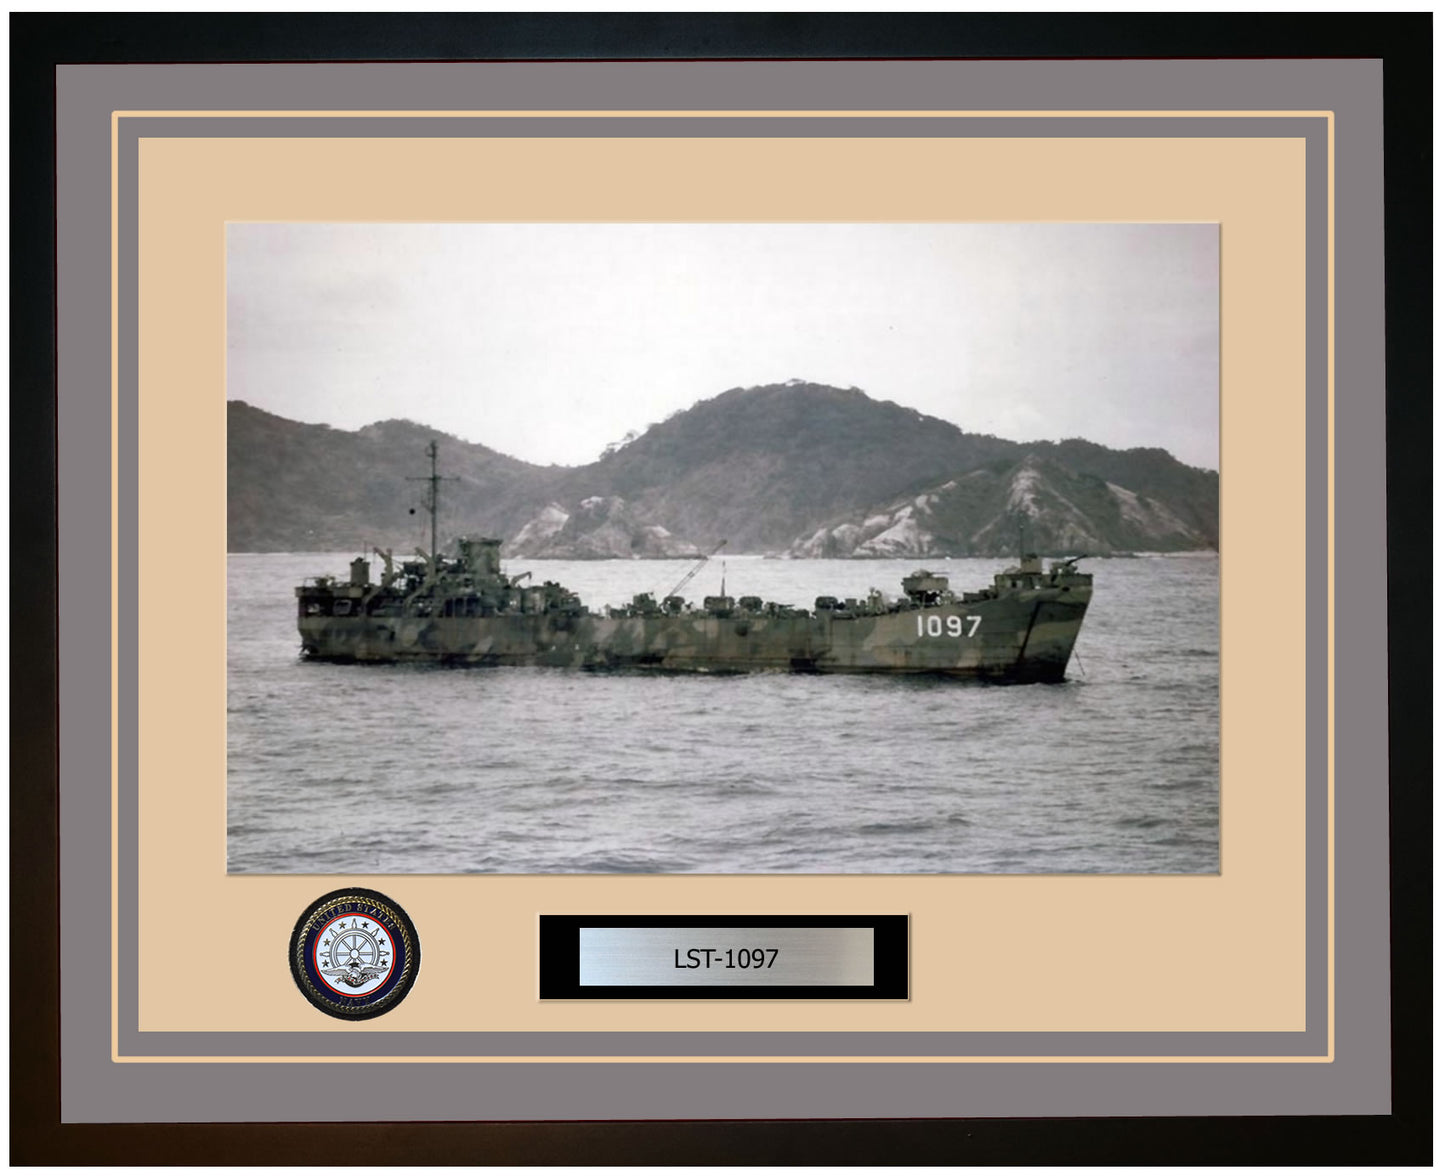 USS TH LST-1097 Framed Navy Ship Photo Grey